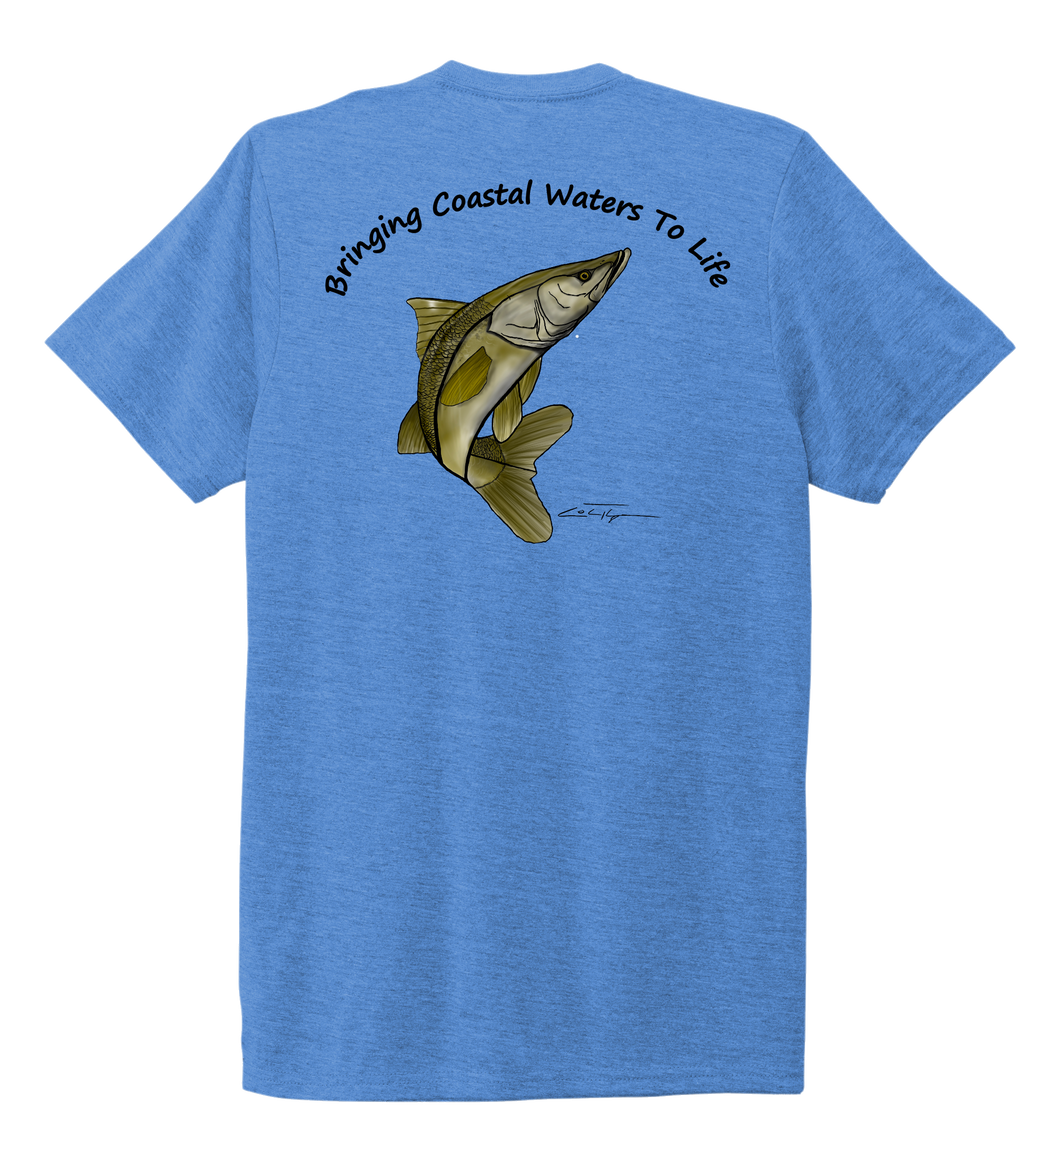 Ocean Habitats & Colin Thompson Collaboration - Unisex Crew Neck T-shirt in Sky Blue